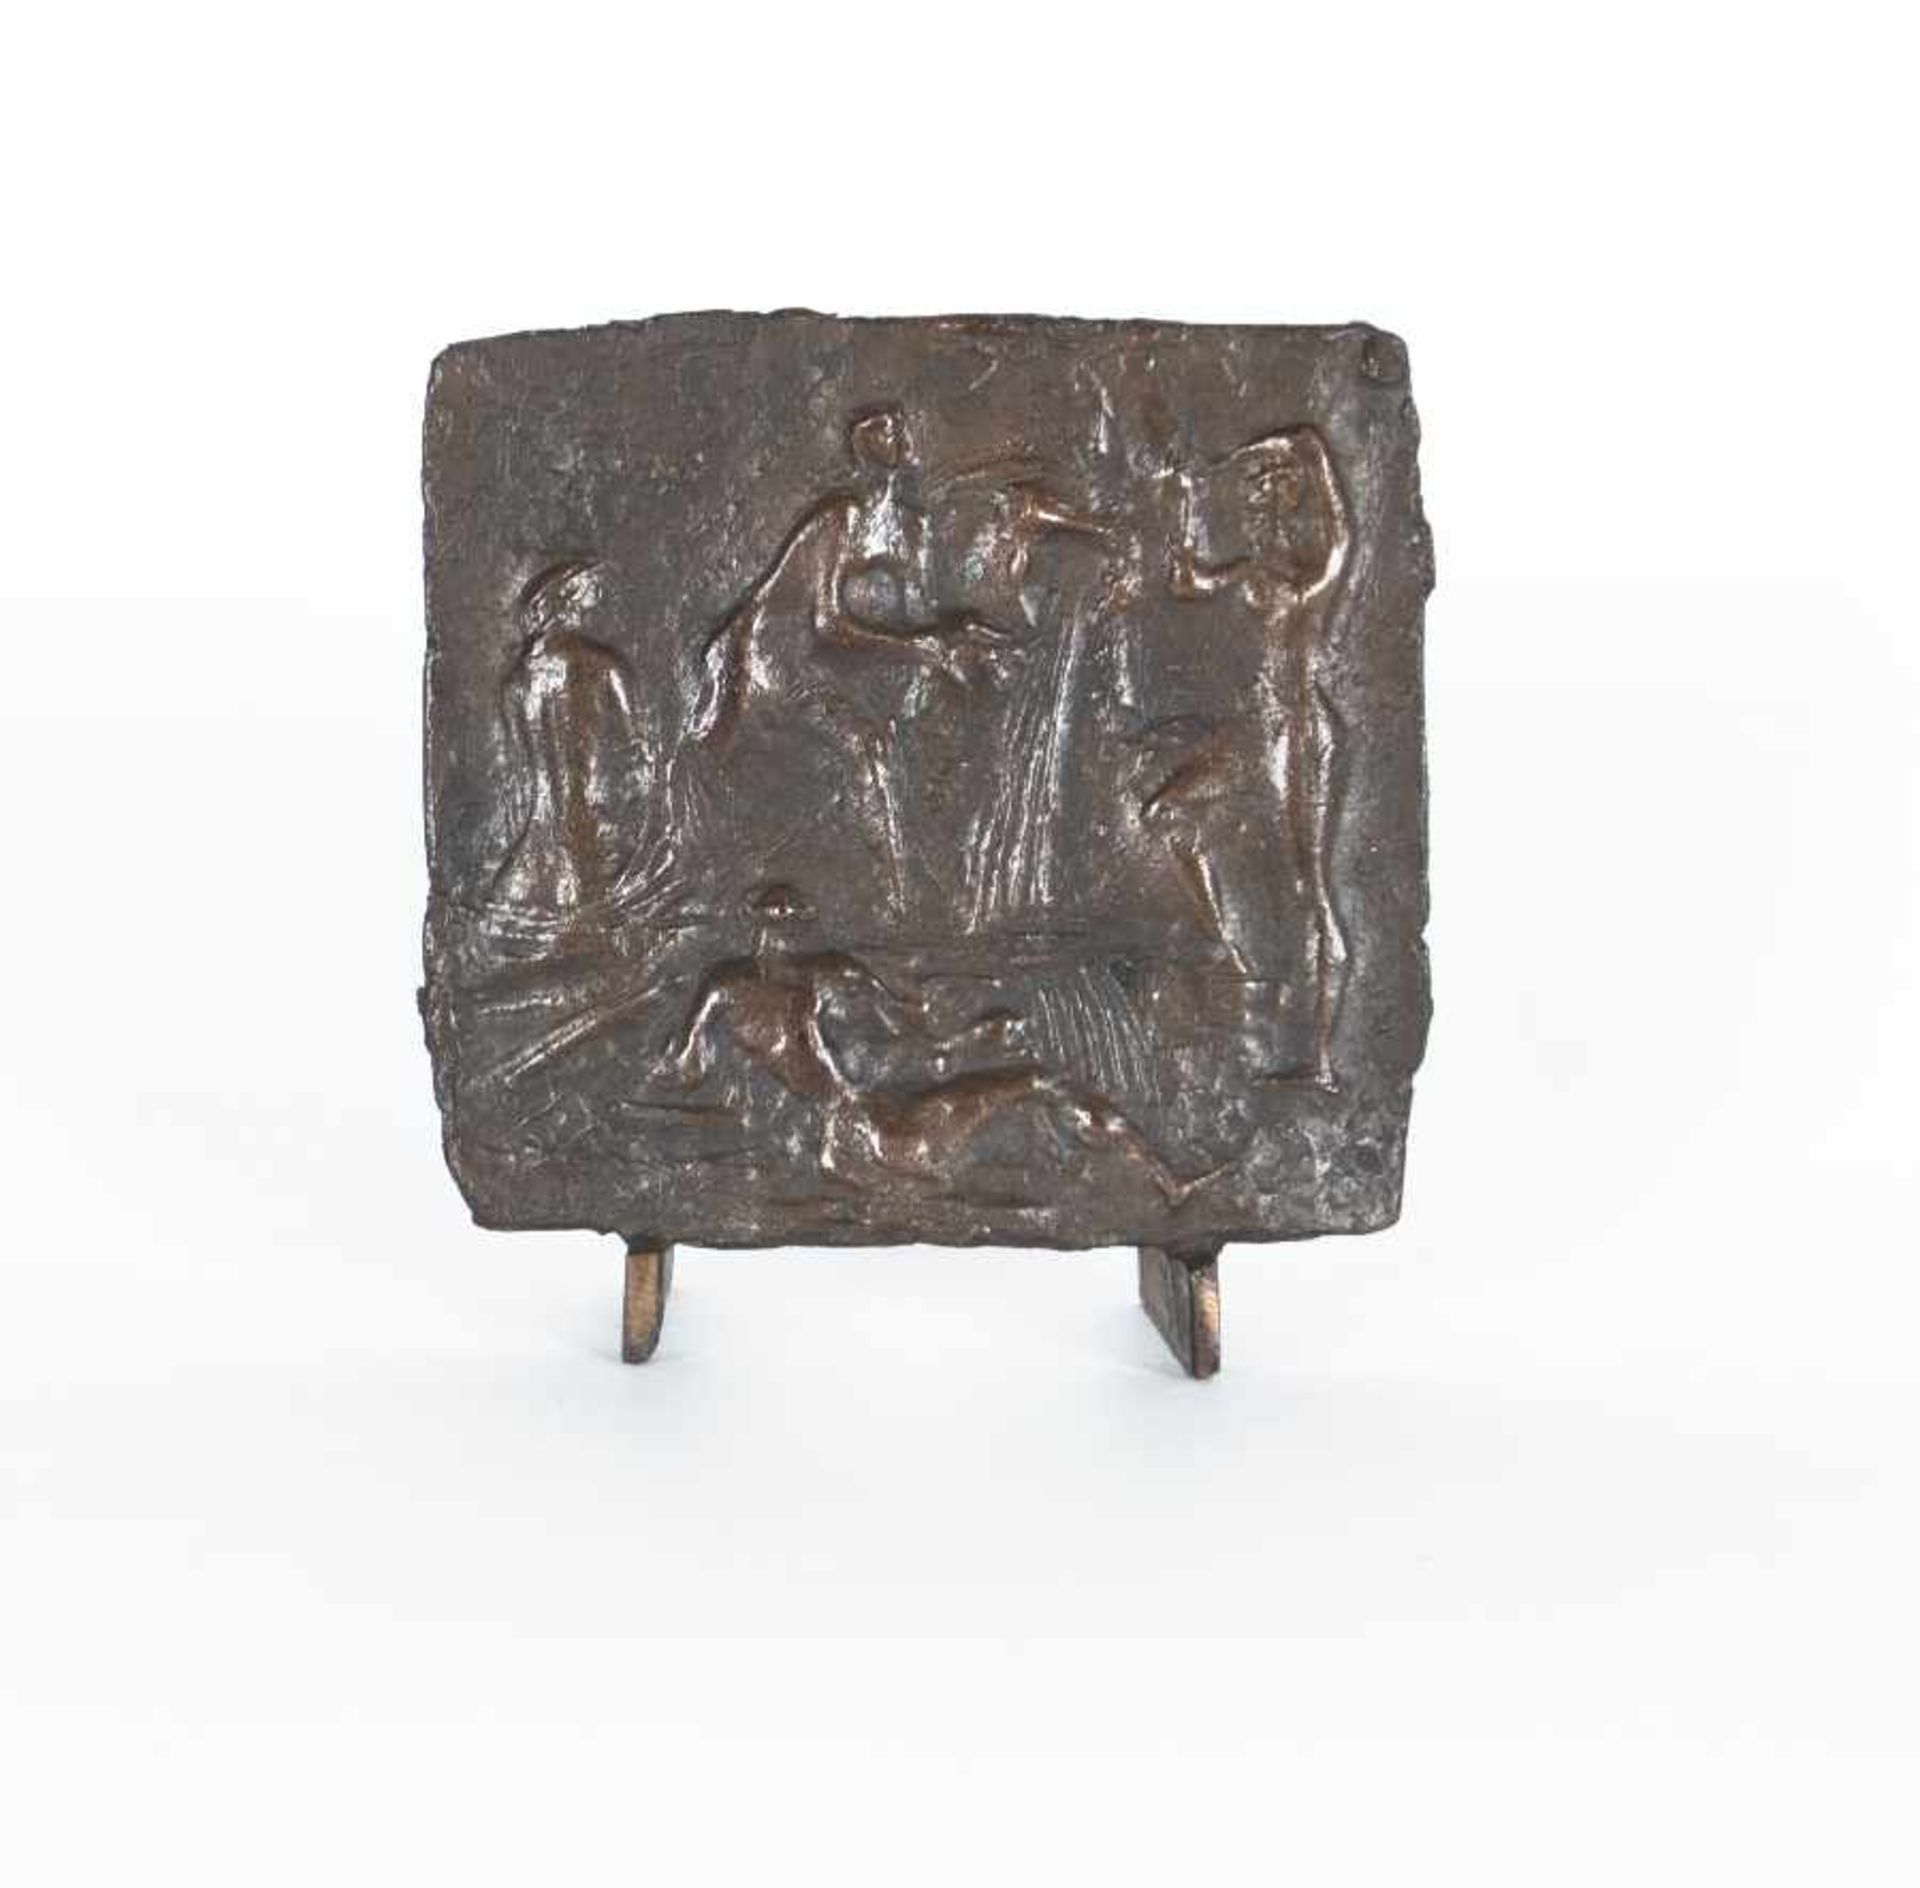 Franz Mikorey 1907 - 1986 Antike Badeszene Bronze; H 13 cm, B 12 cm; nummeriert verso " 9-20"